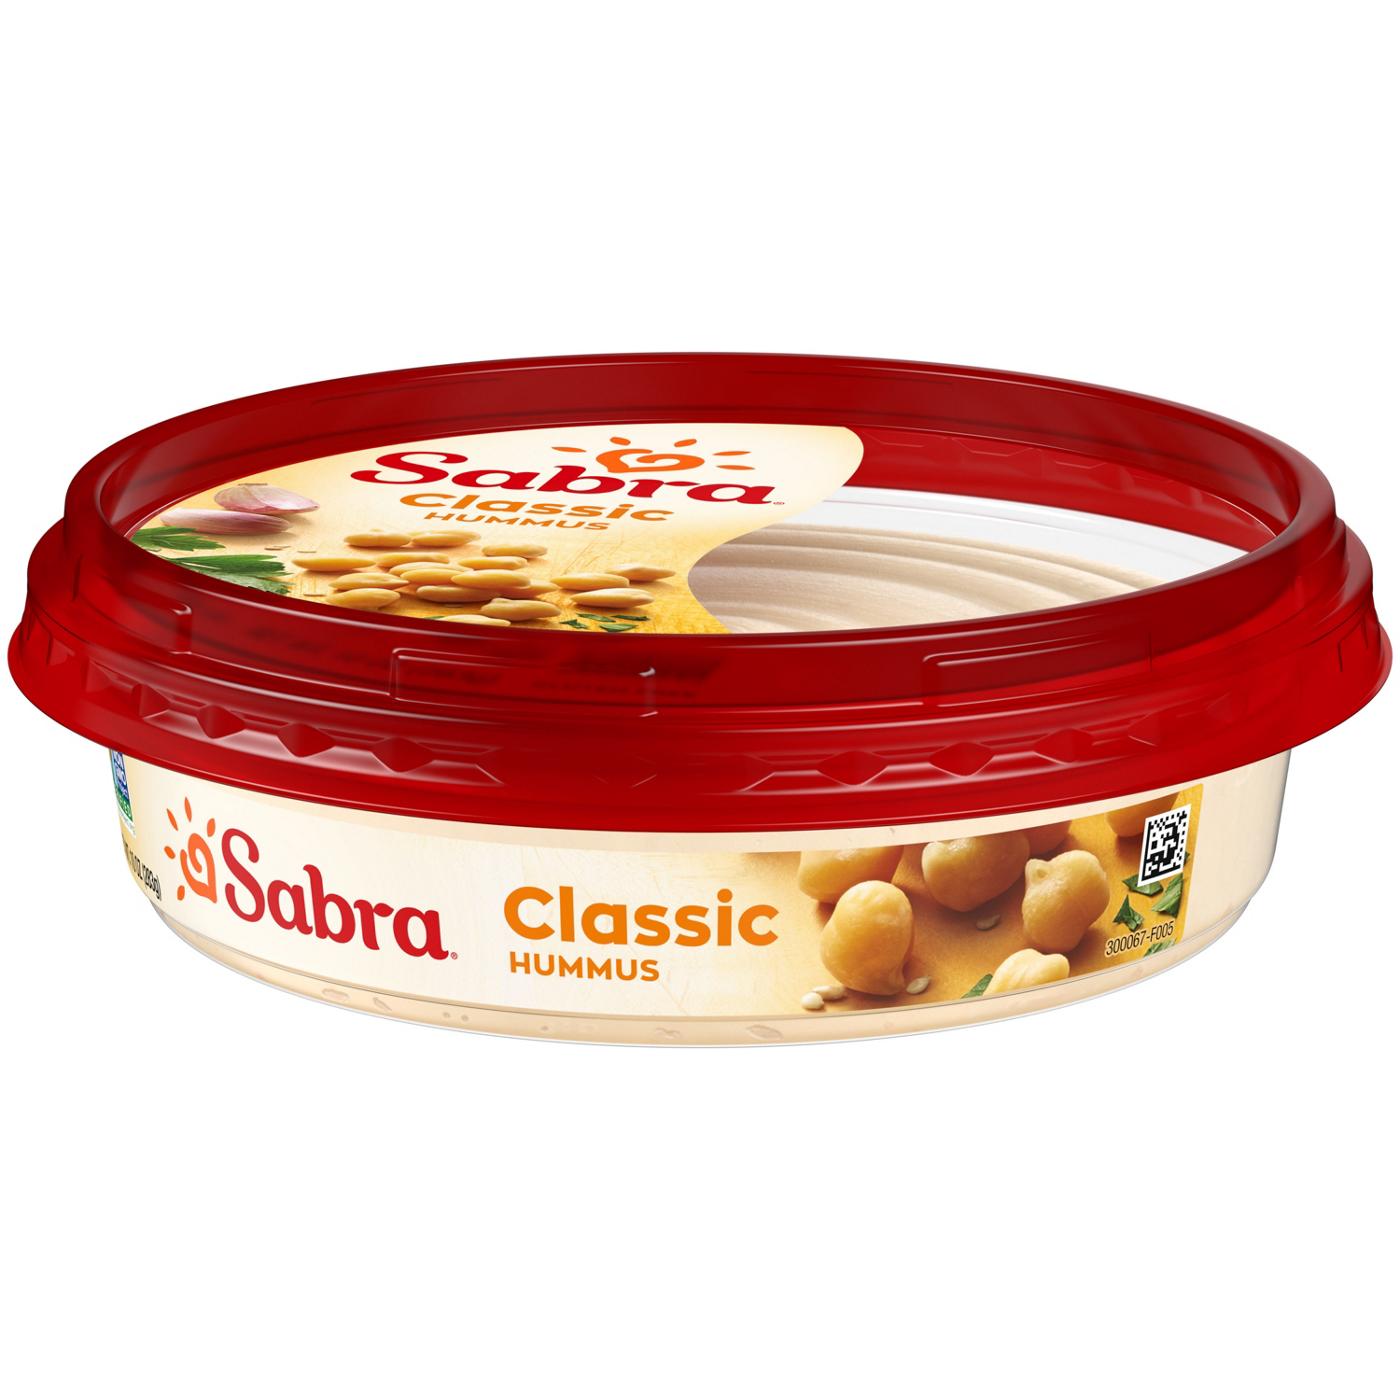 Sabra Classic Hummus; image 7 of 7